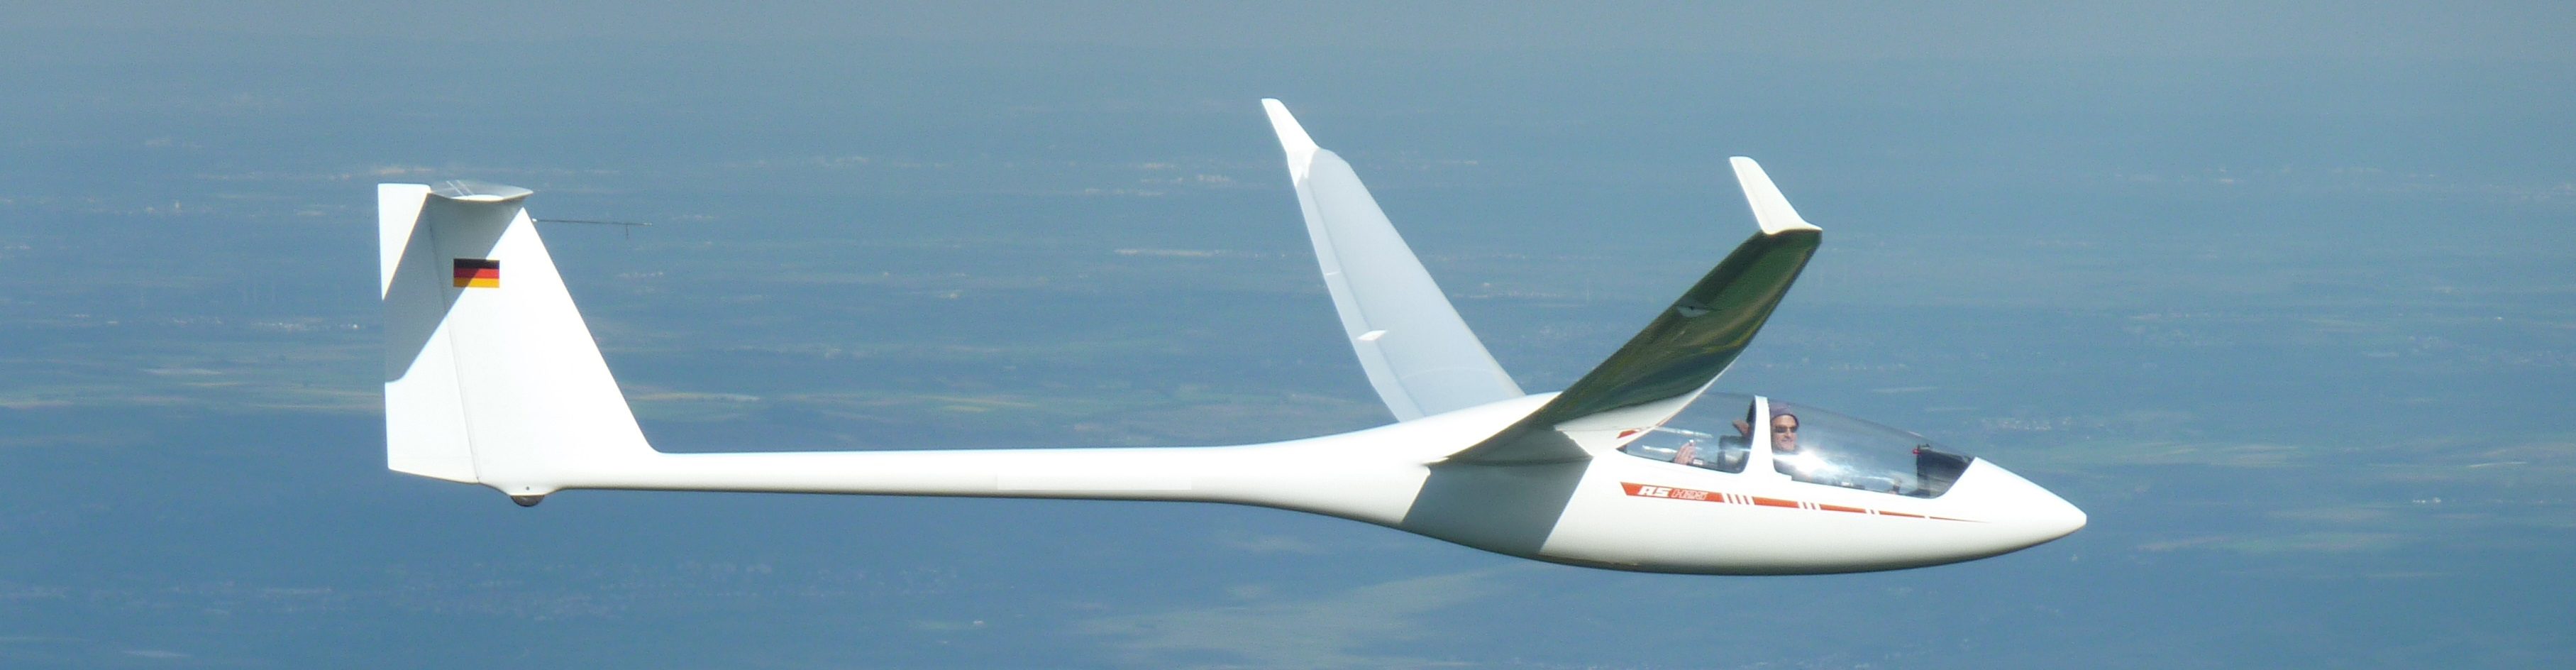 Photo eines Segelflugzeugs im Flug